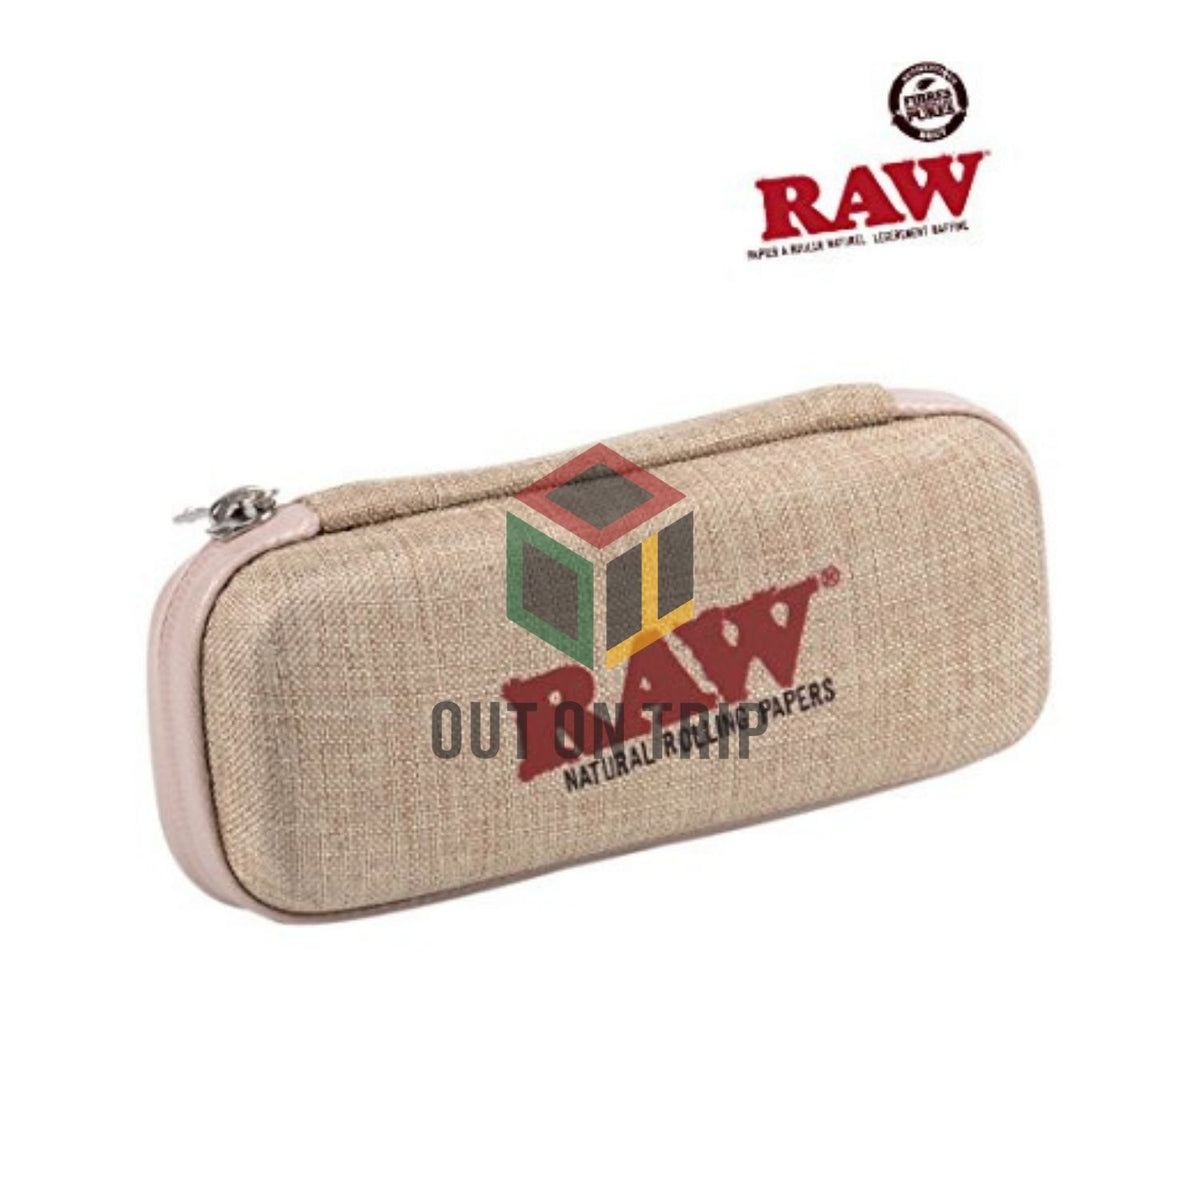 Raw Travel Kit Pouch